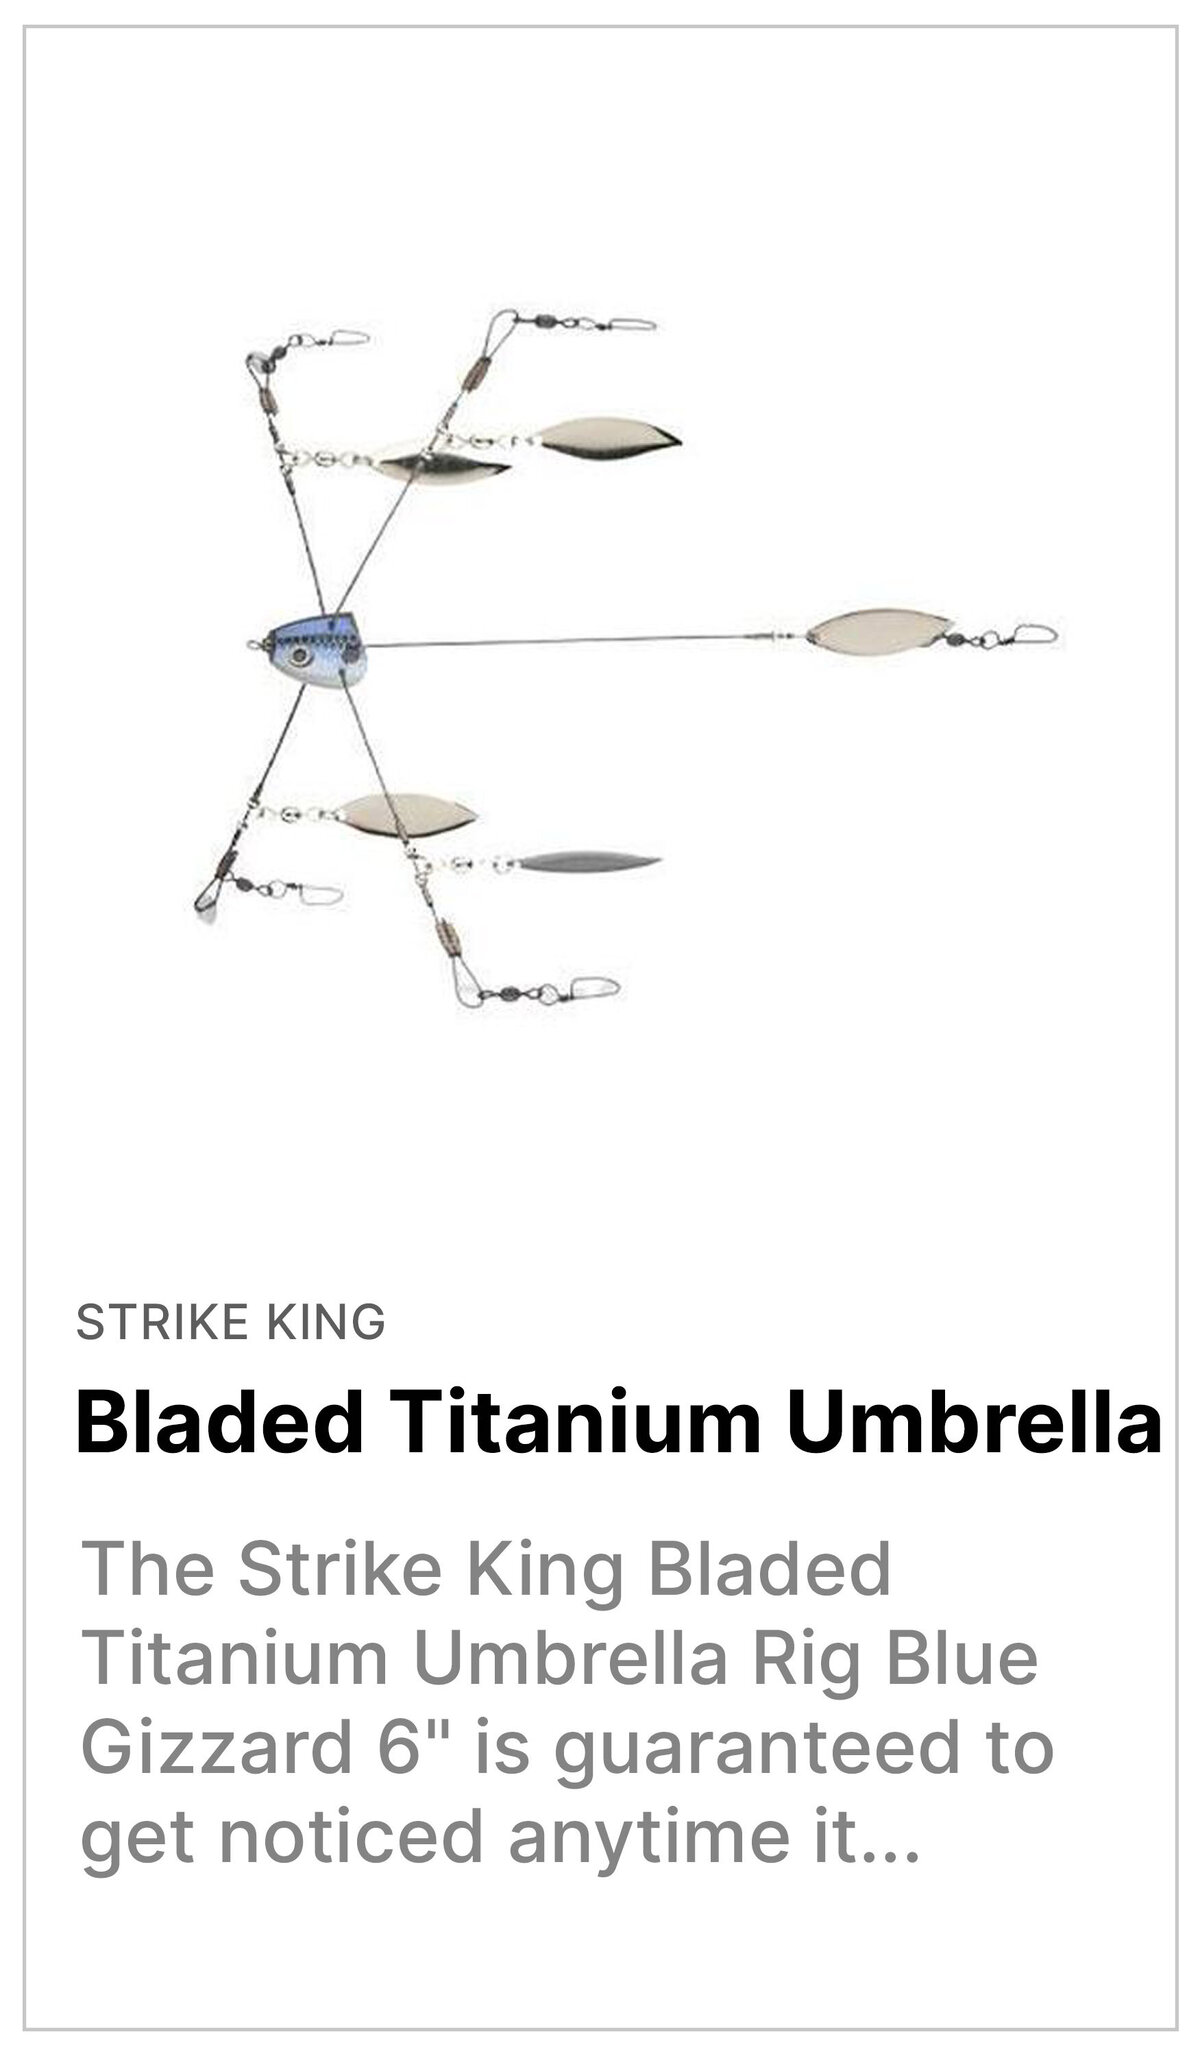 Strike King Bladed Titanium Umbrella Rig Blue Gizzard 6''